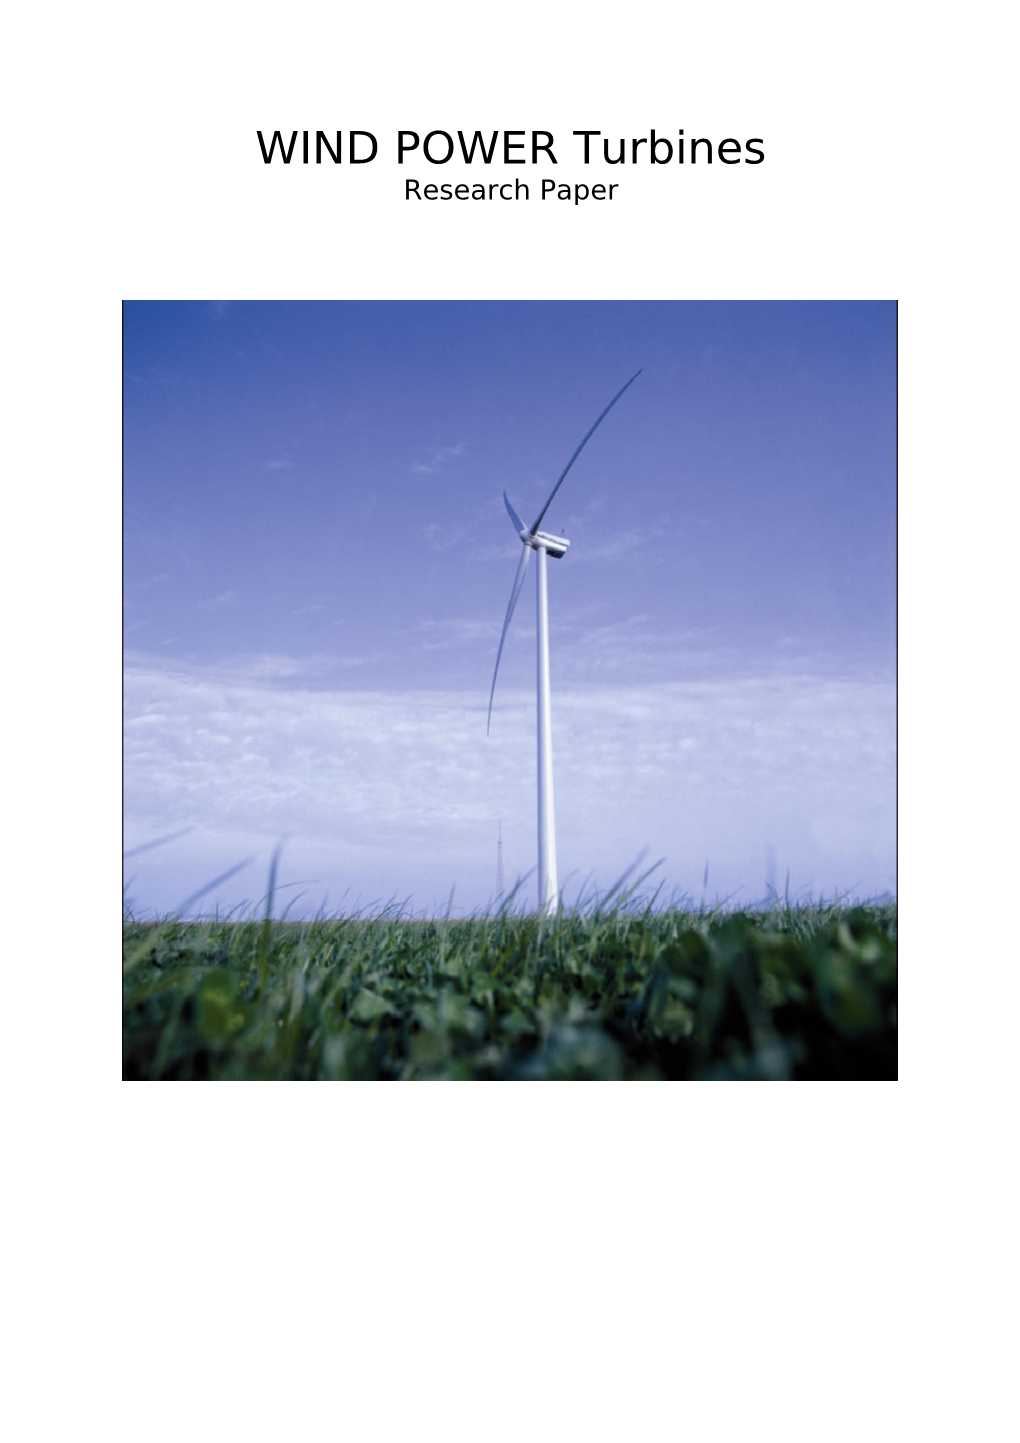 Ii Principles of a Wind Power Turbine Behaviour